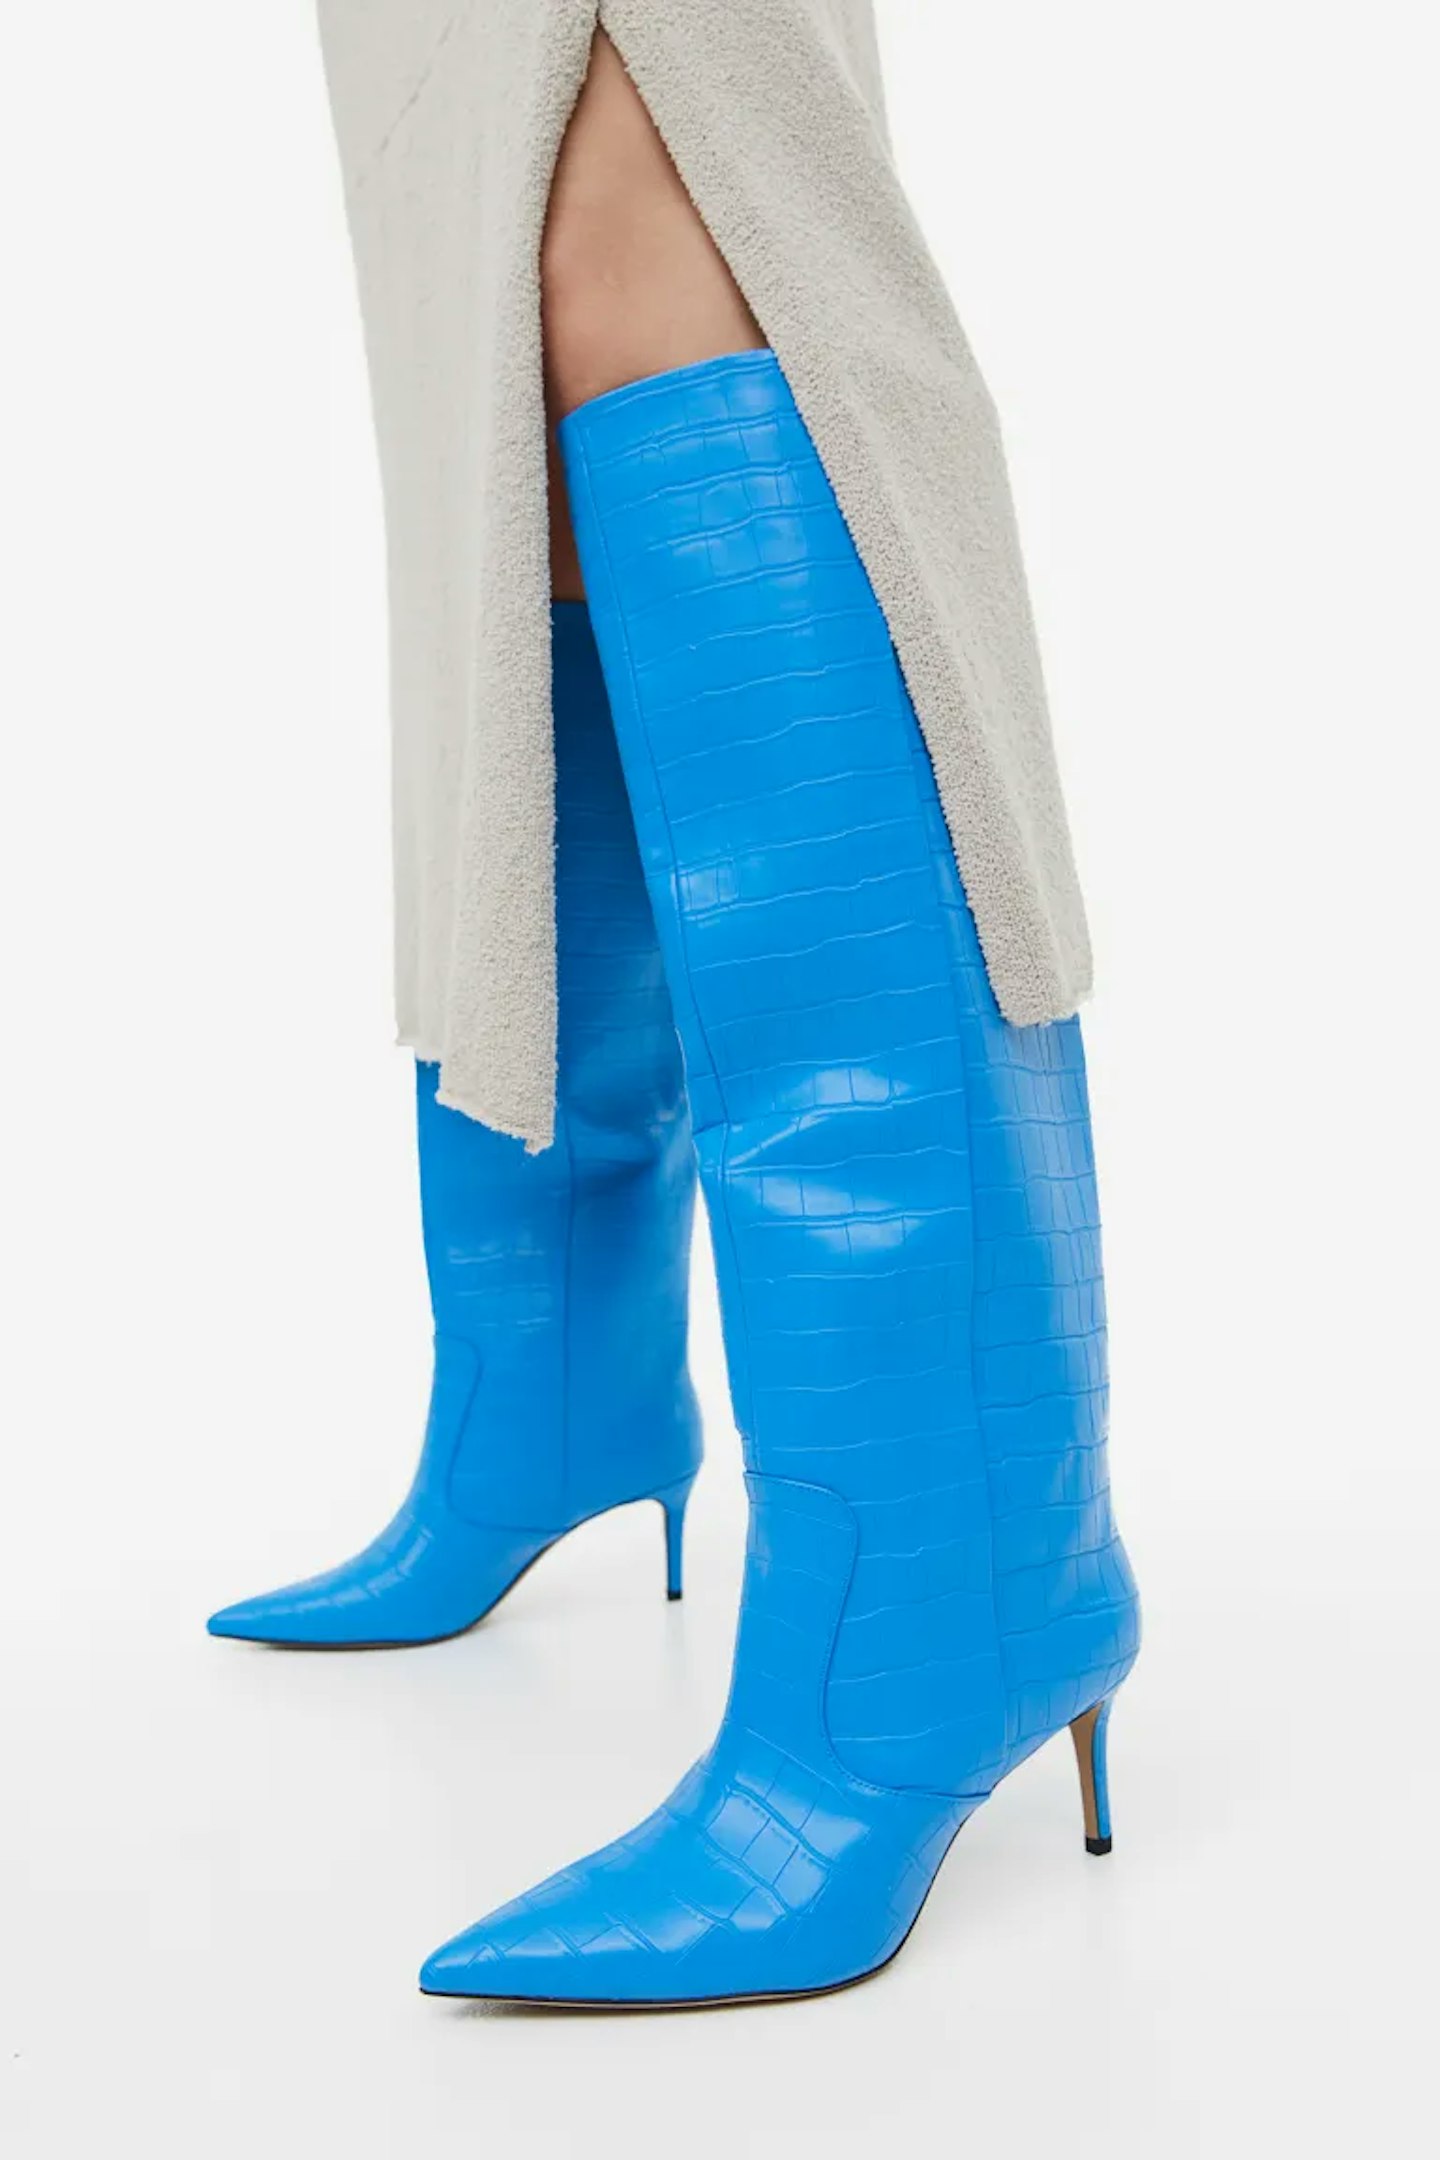 H&M Knee-high heeled boots